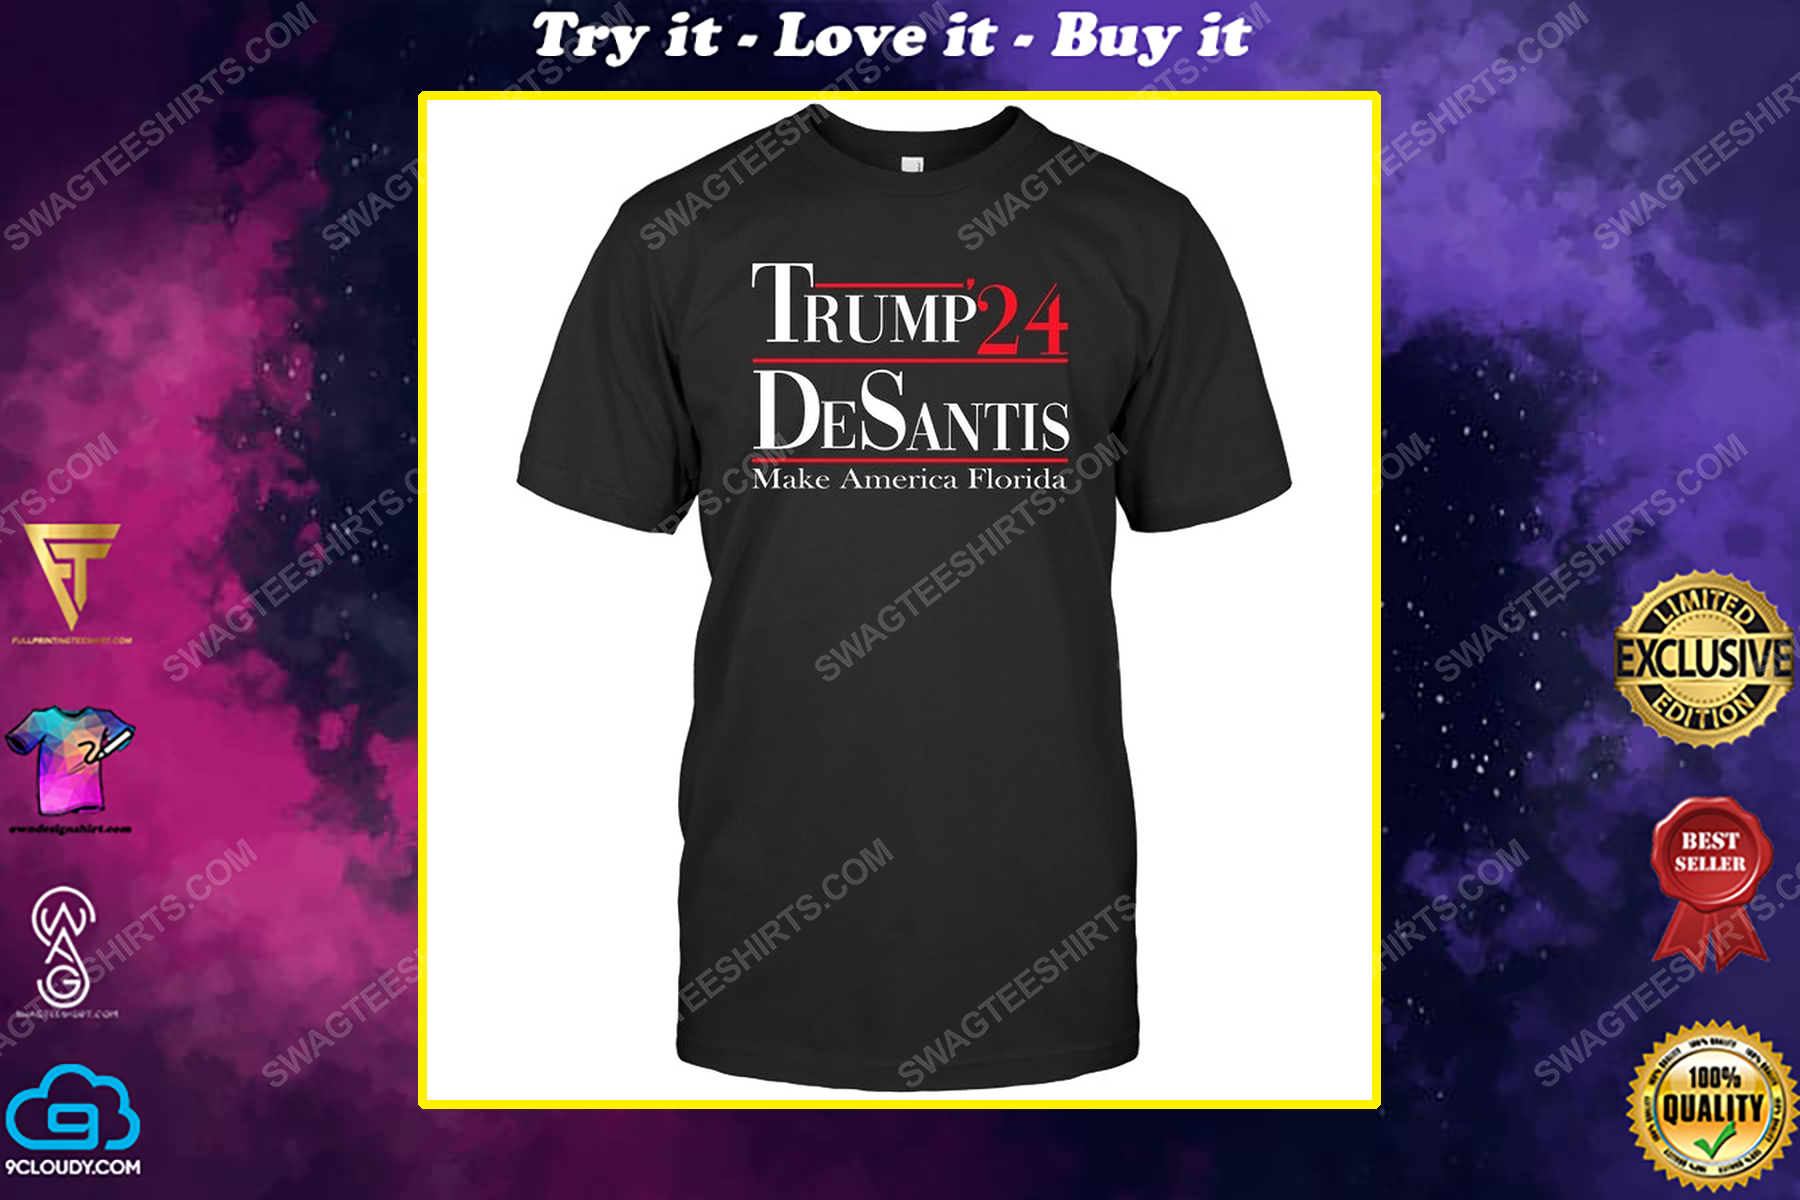 Trump 24 desantis make america florida political shirt